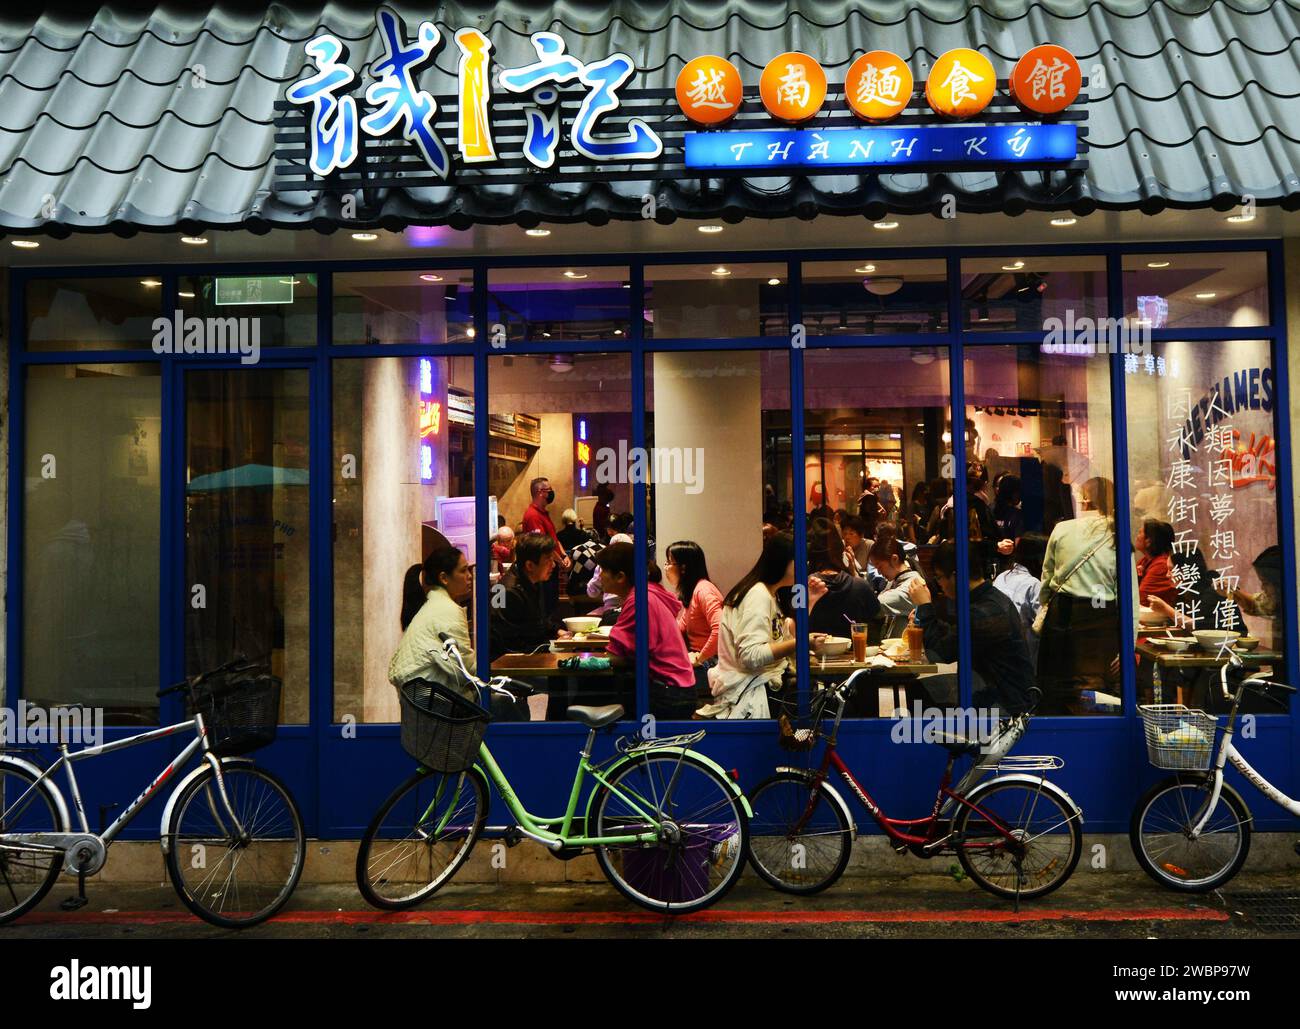 THANH KY Vietnamese restaurant on Yongkang St in Taipei, Taiwan. Stock Photo